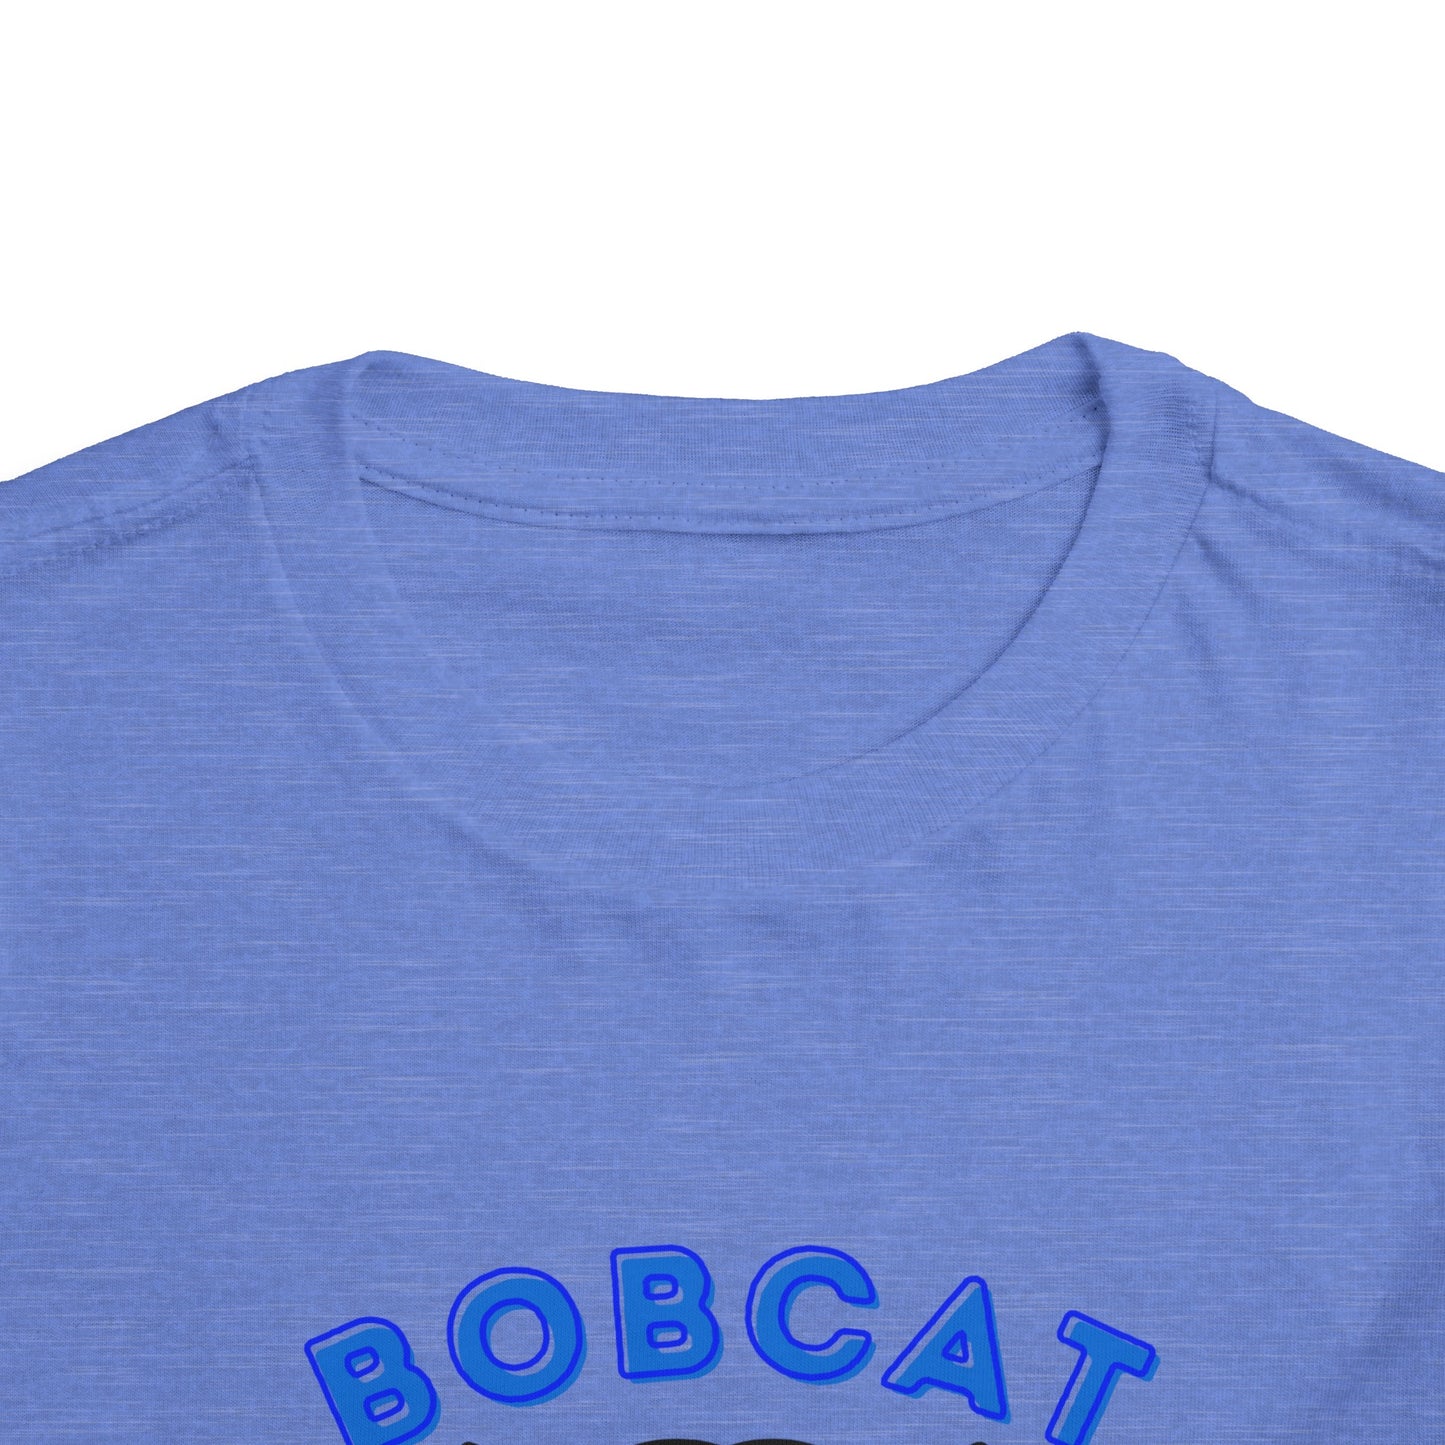 Bobcat Pride Blue Toddler Tee